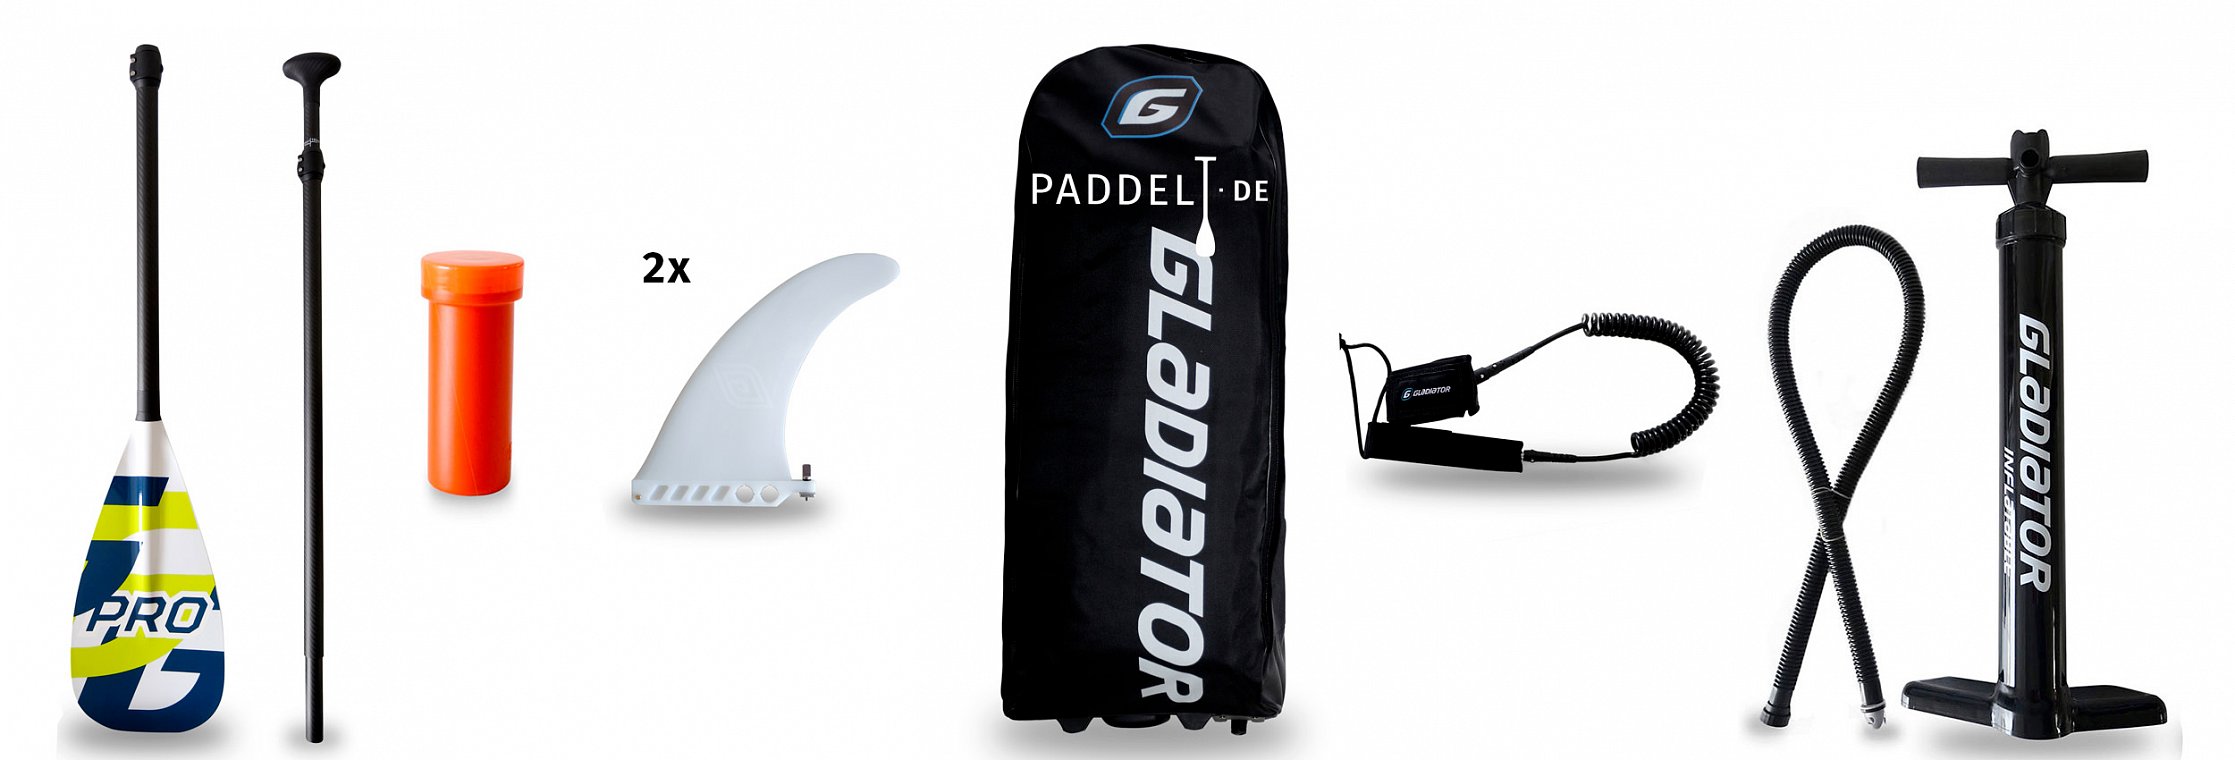 GLADIATOR PRO mit Paddel - aufblasbares Stand Up Paddle Board